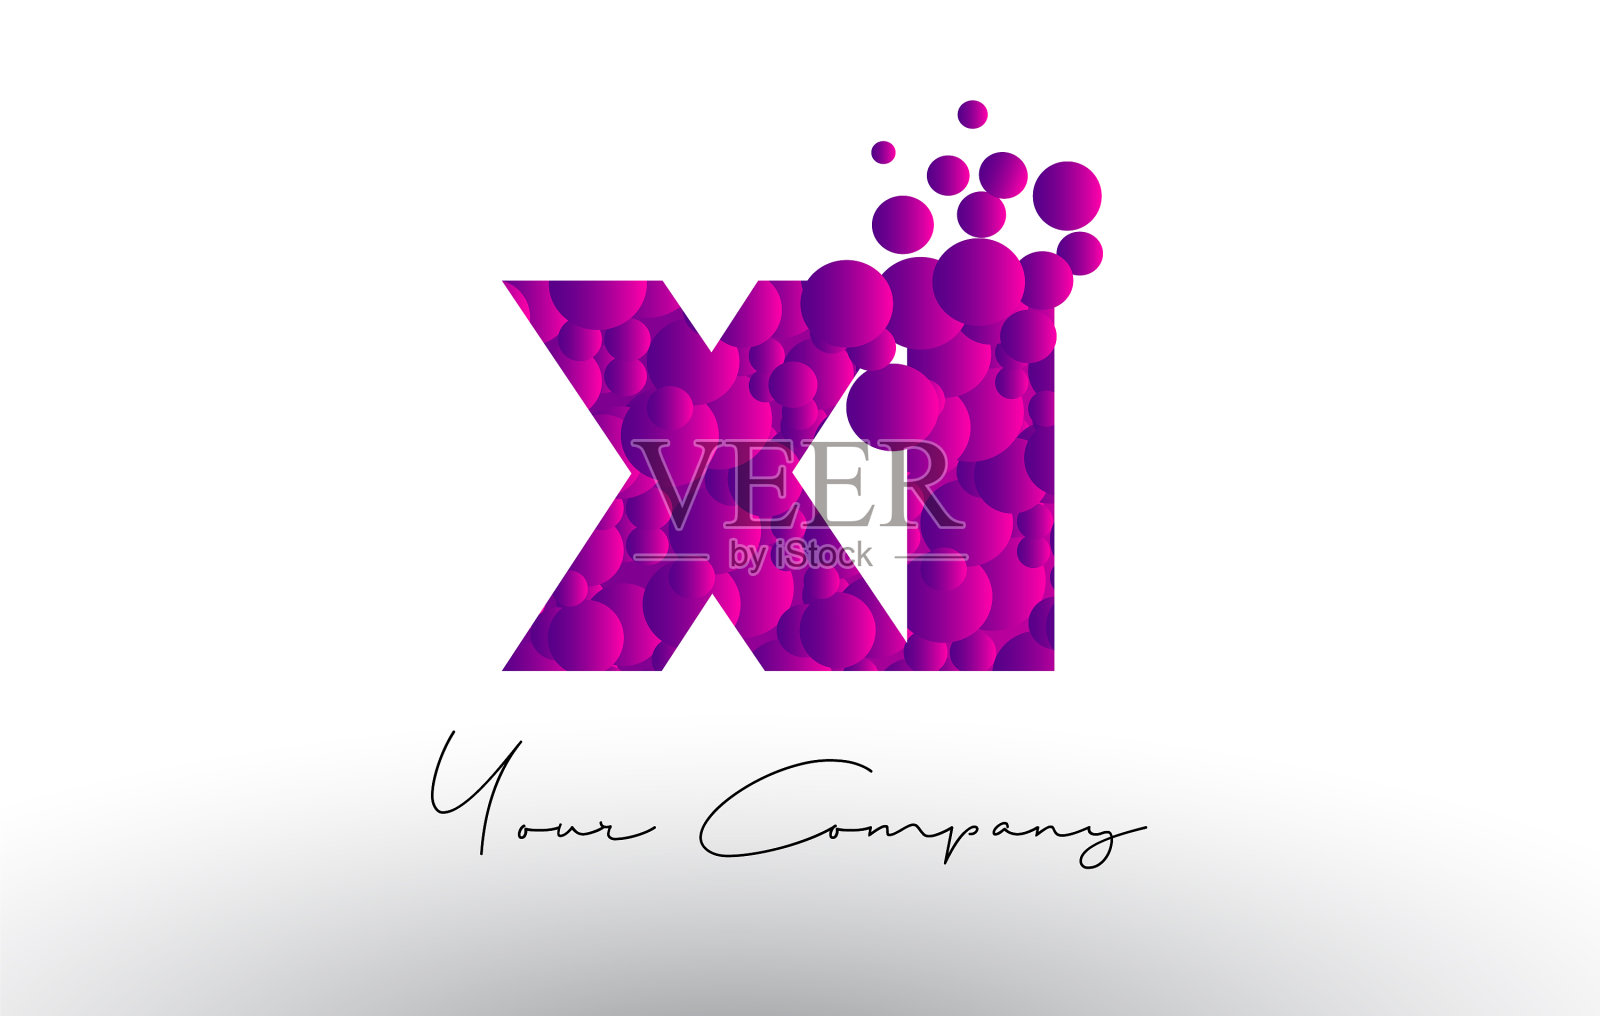 Xi Xi I点字母标志与紫色气泡插画图片素材